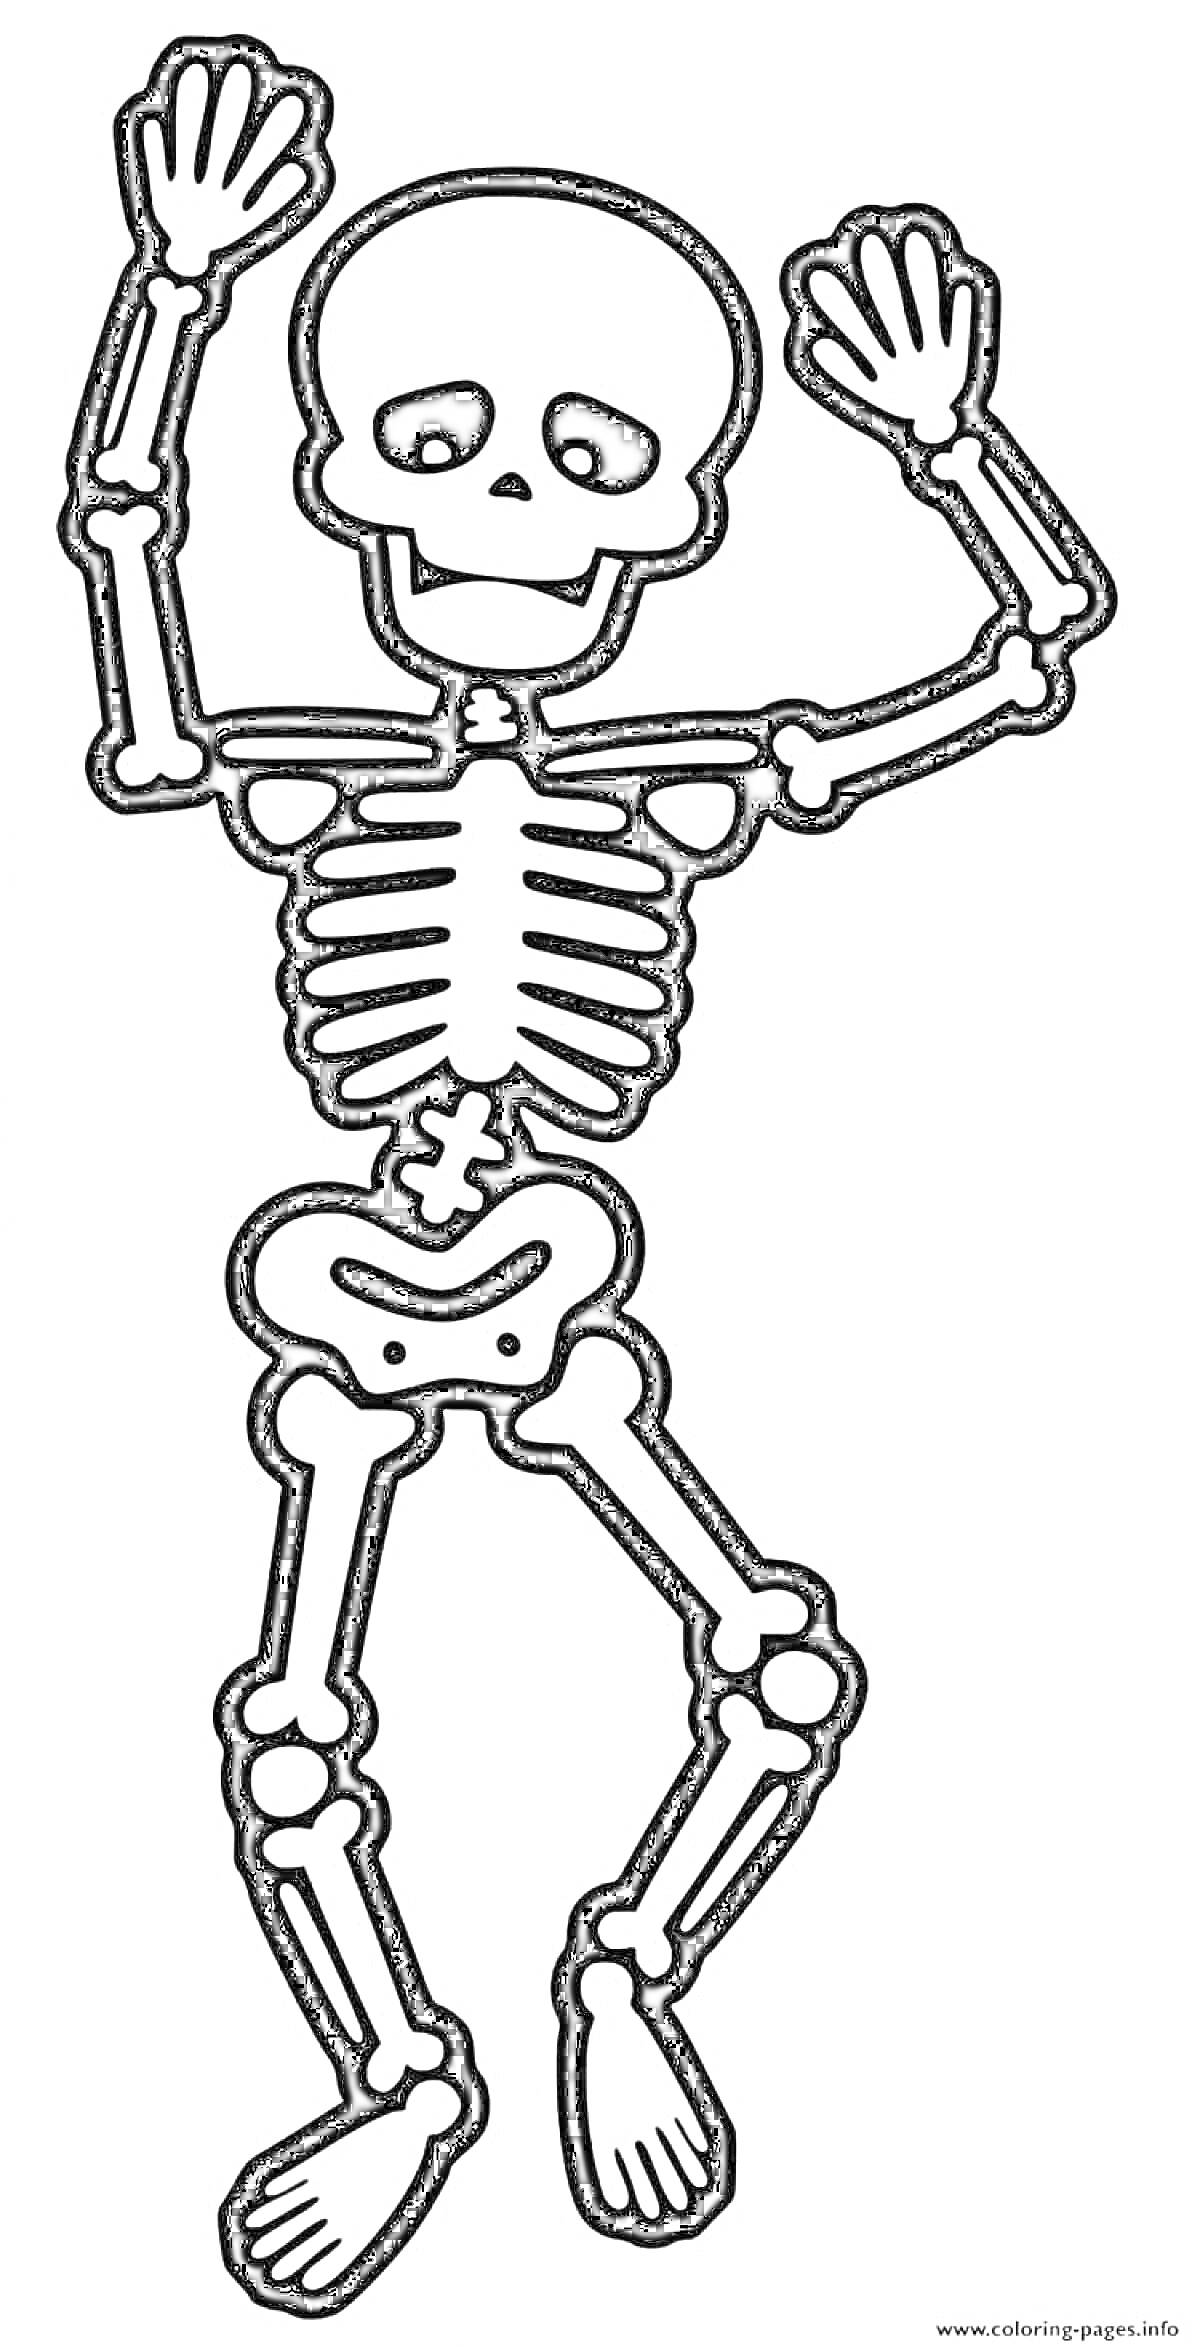 На раскраске изображено: Скелет, Анатомия, Череп, Ребра, Позвоночник, Руки, Кисти, Ноги, Танец, Кости